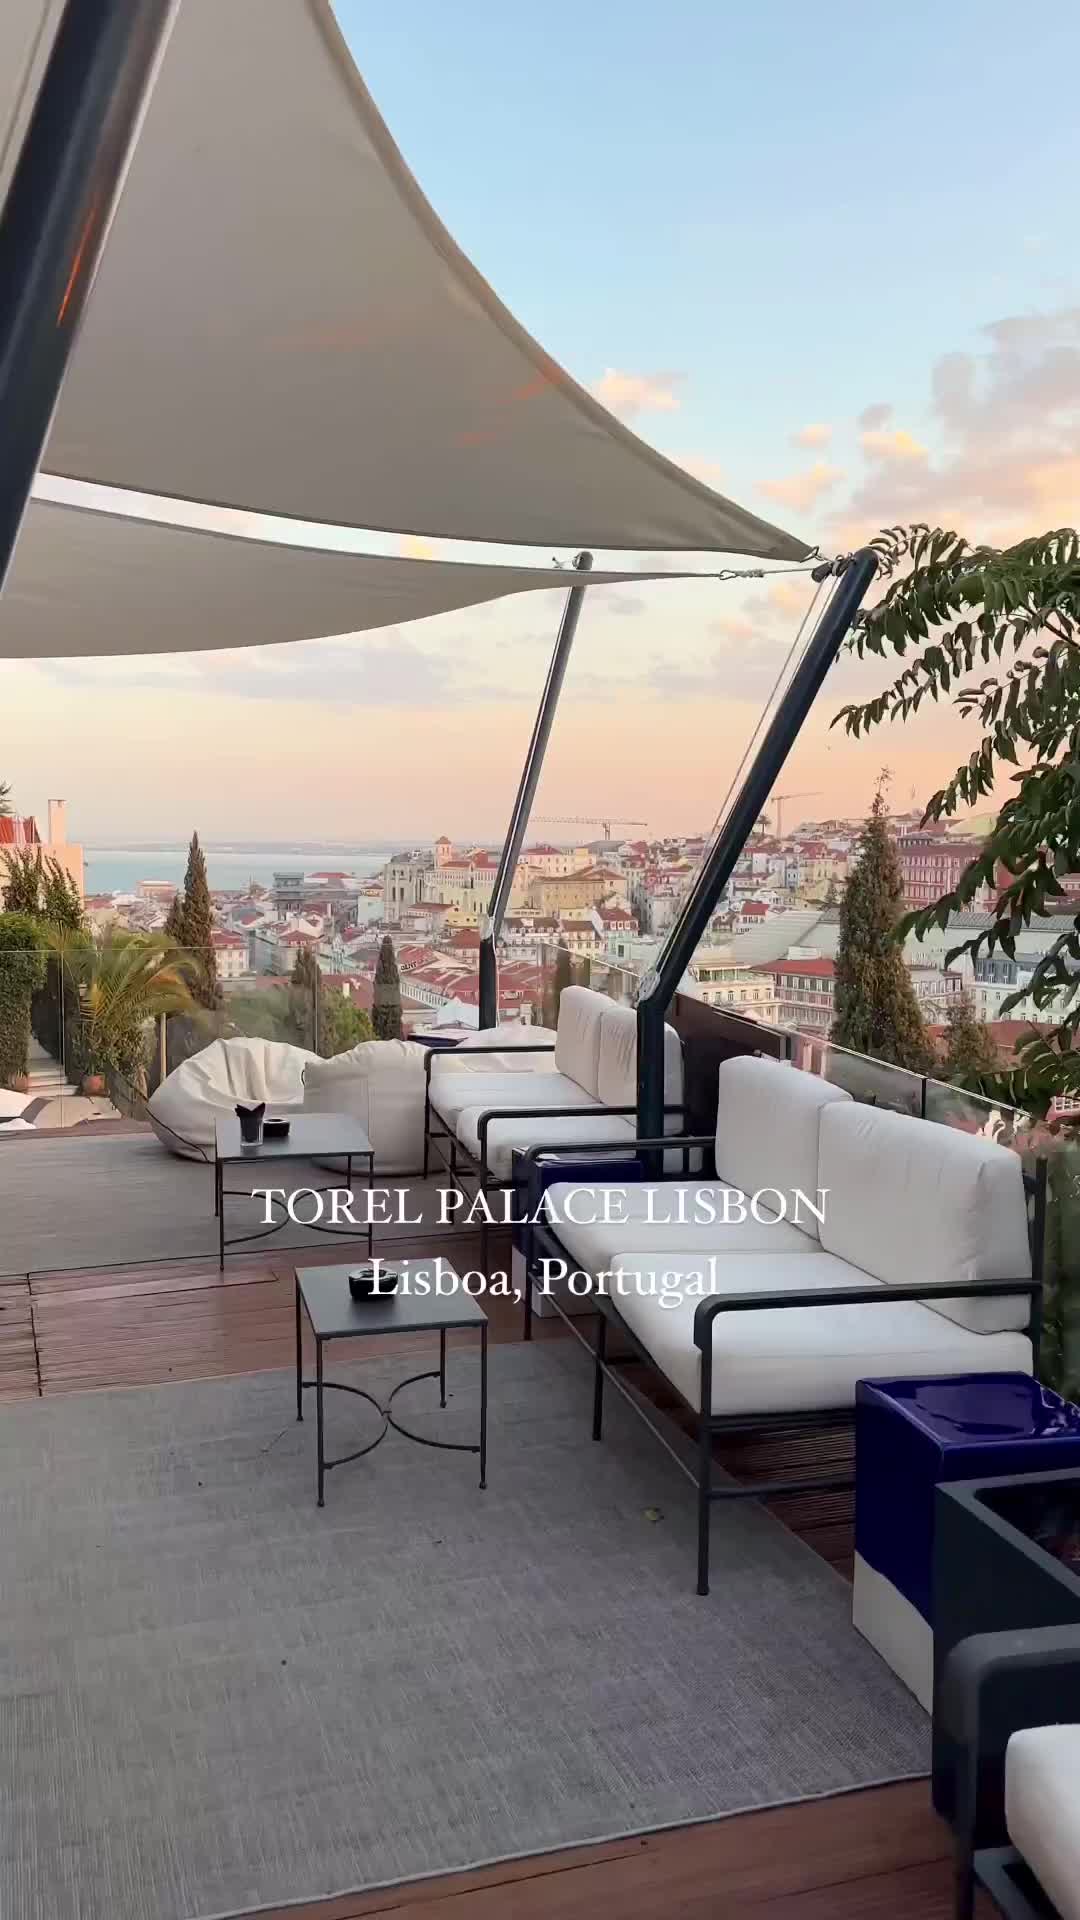 Award-Winning Sunset Views at Torel Palace Lisbon